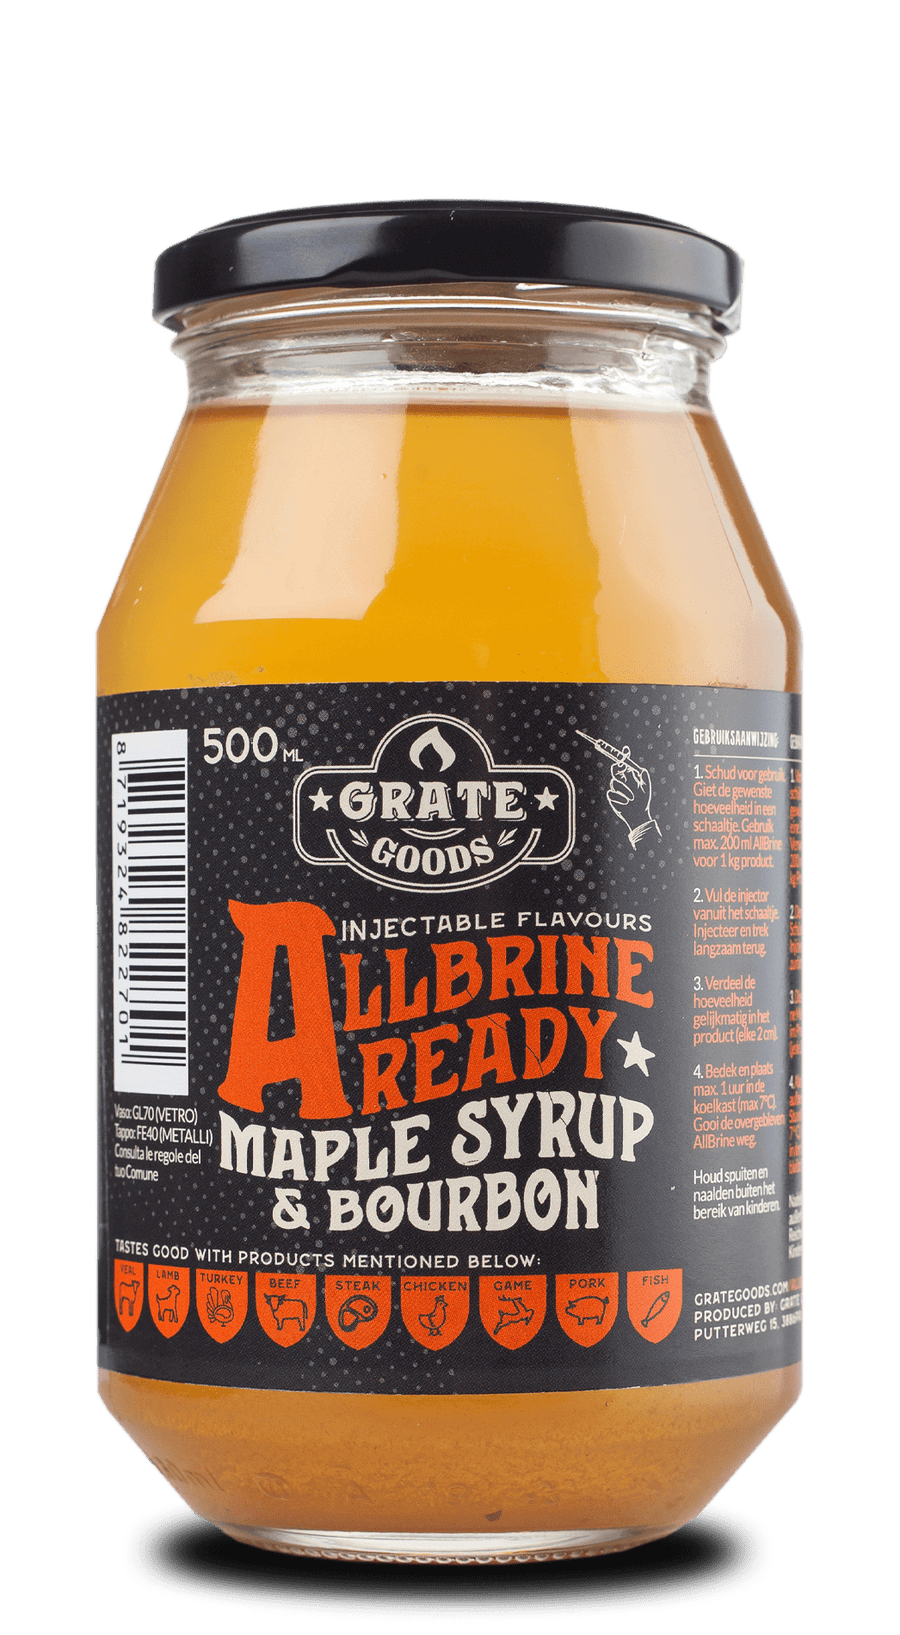 All Brine Ready -  Maple Syrup & Bourbon